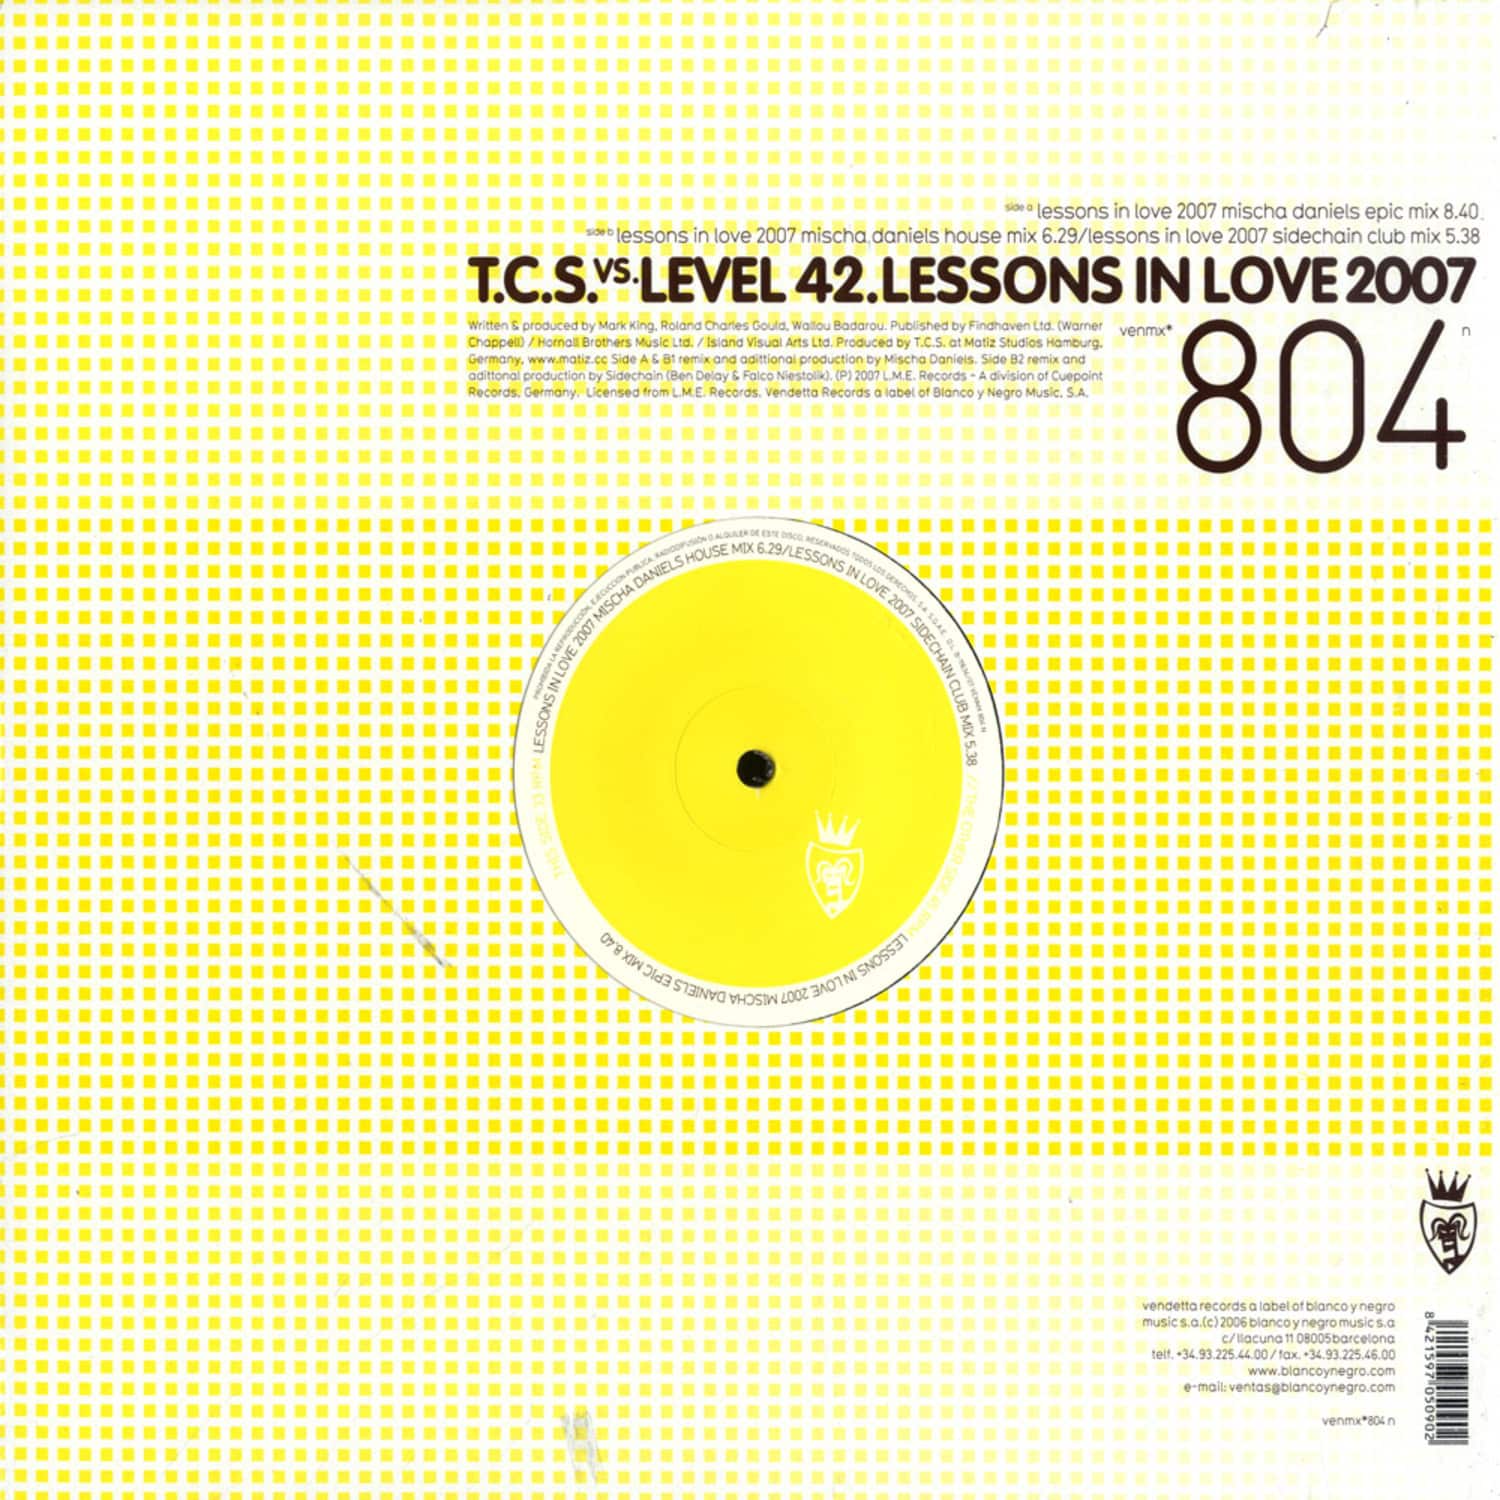 T.C.S. vs. Level 42 - LESSONS IN LOVE 2007